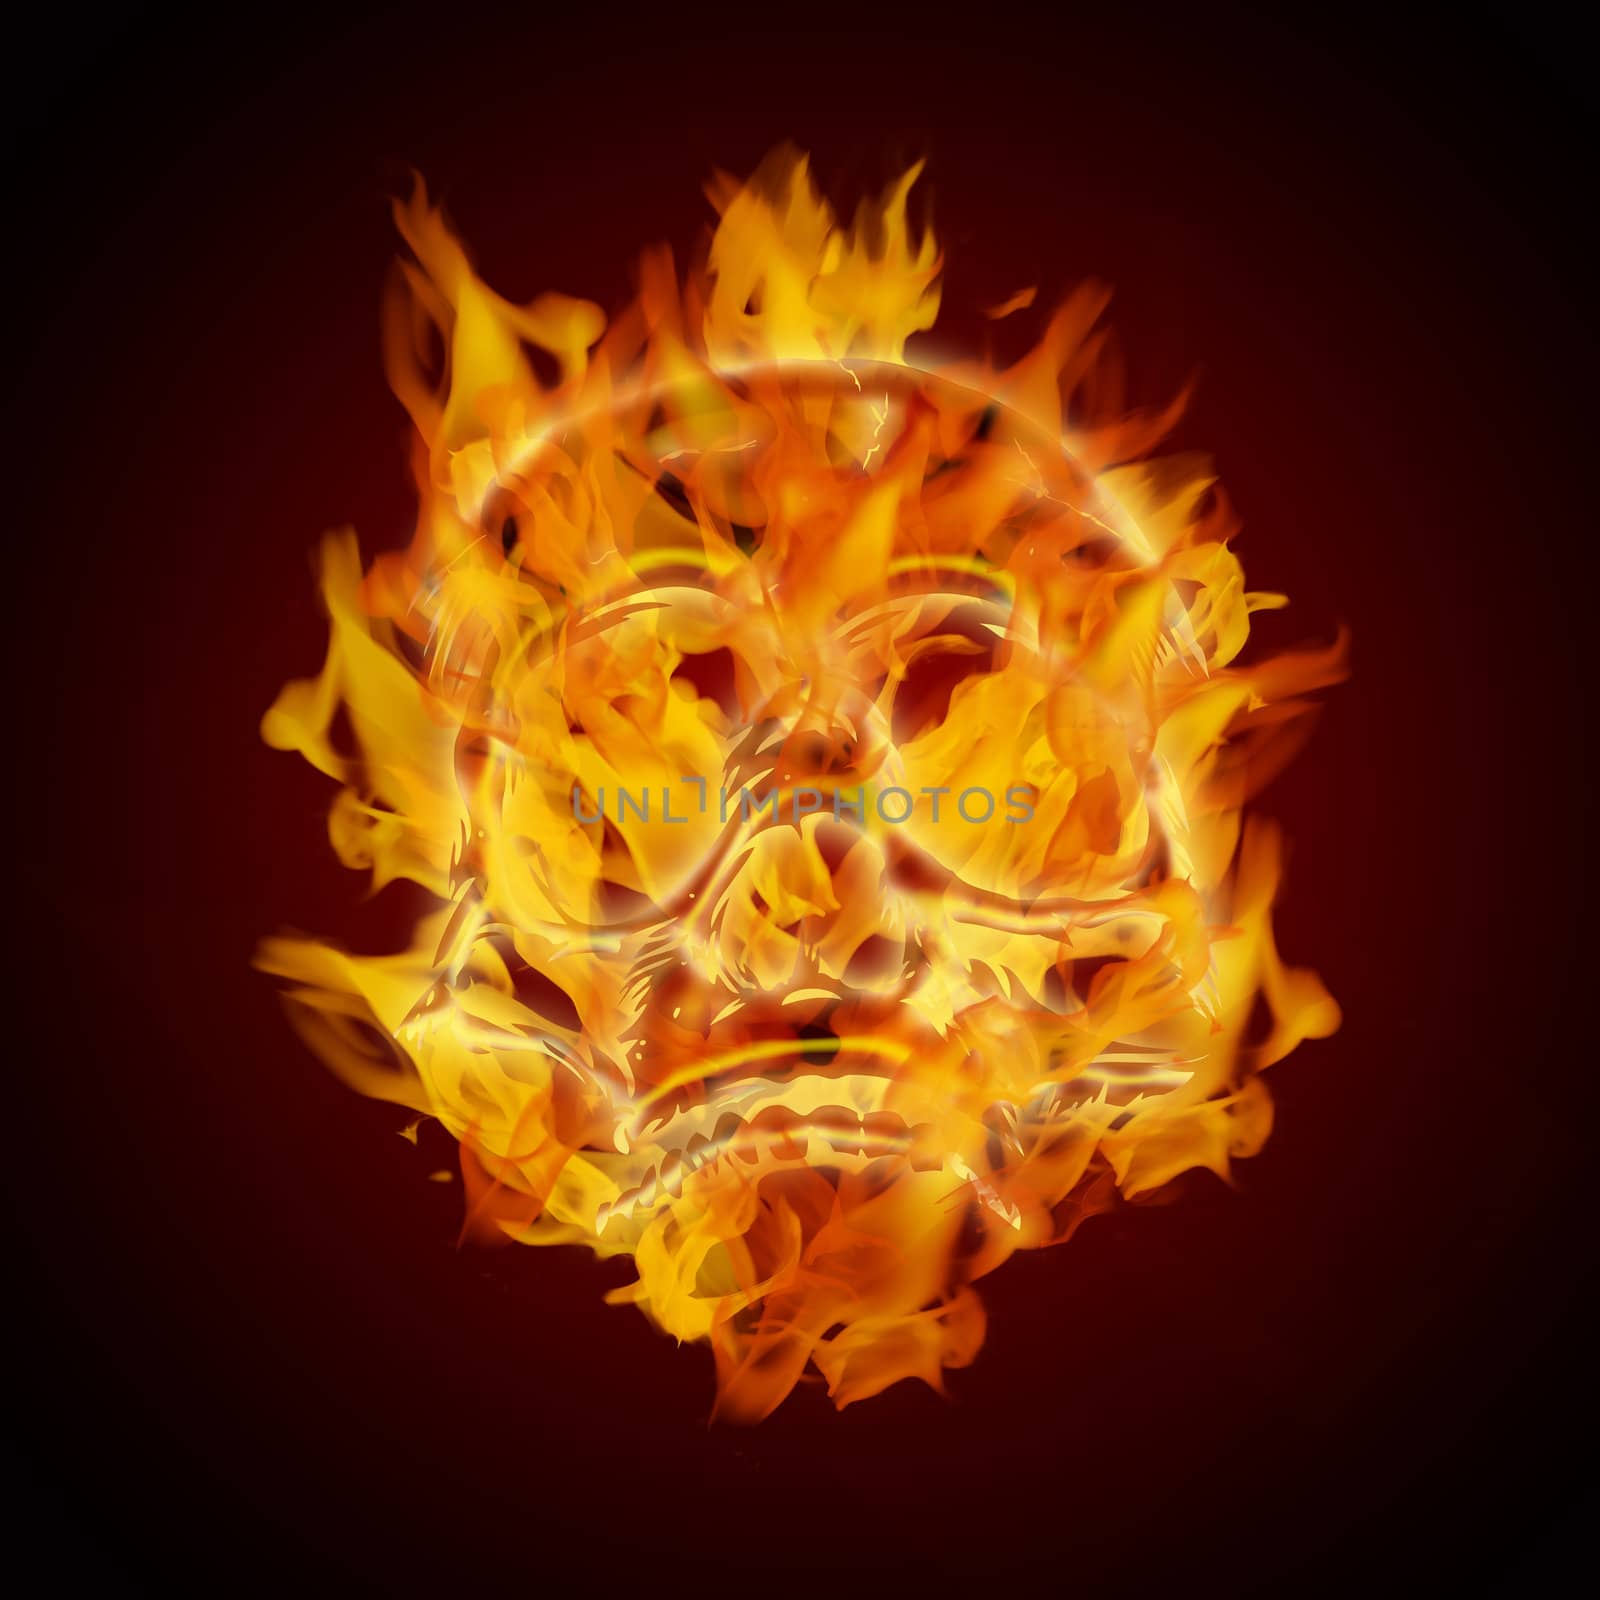 Fire Burning Flaming Skull on Dark Background Illustration